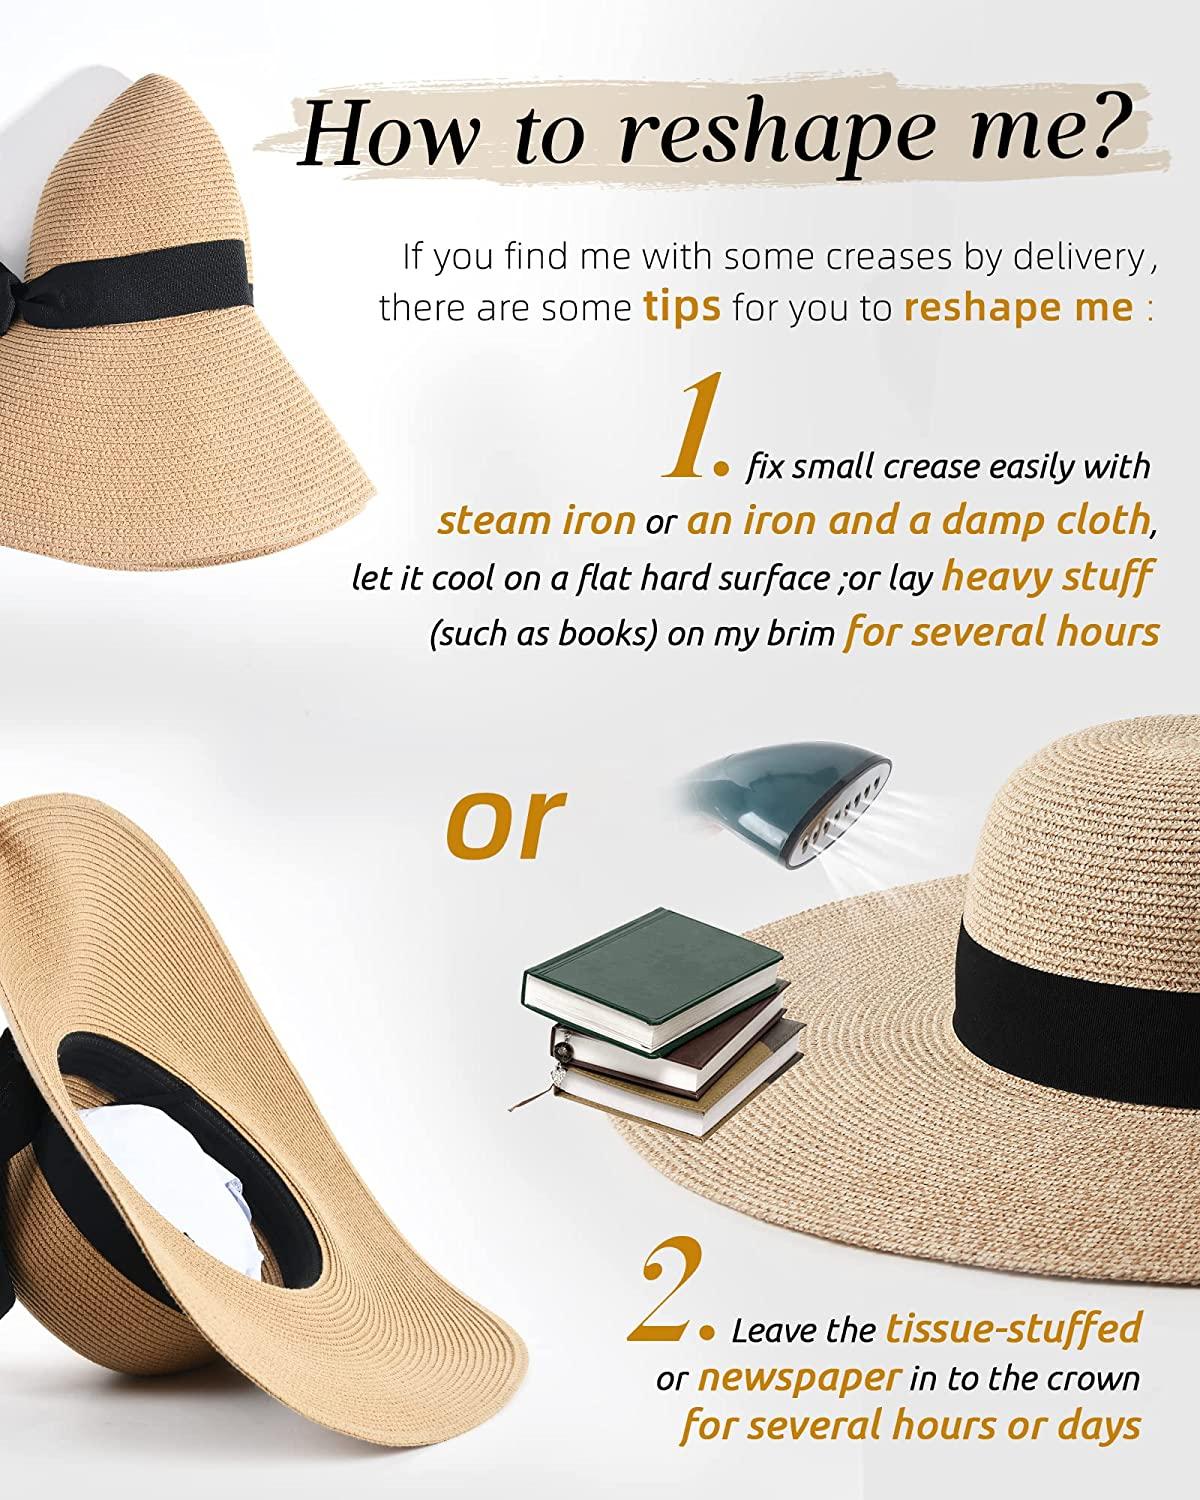 Sun Hat Womens, Beach Floppy Hats for Women Foldable, Wide Brim Summer  Packable Lace Sun Beach Floppy Hats Women Beige at  Women's Clothing  store